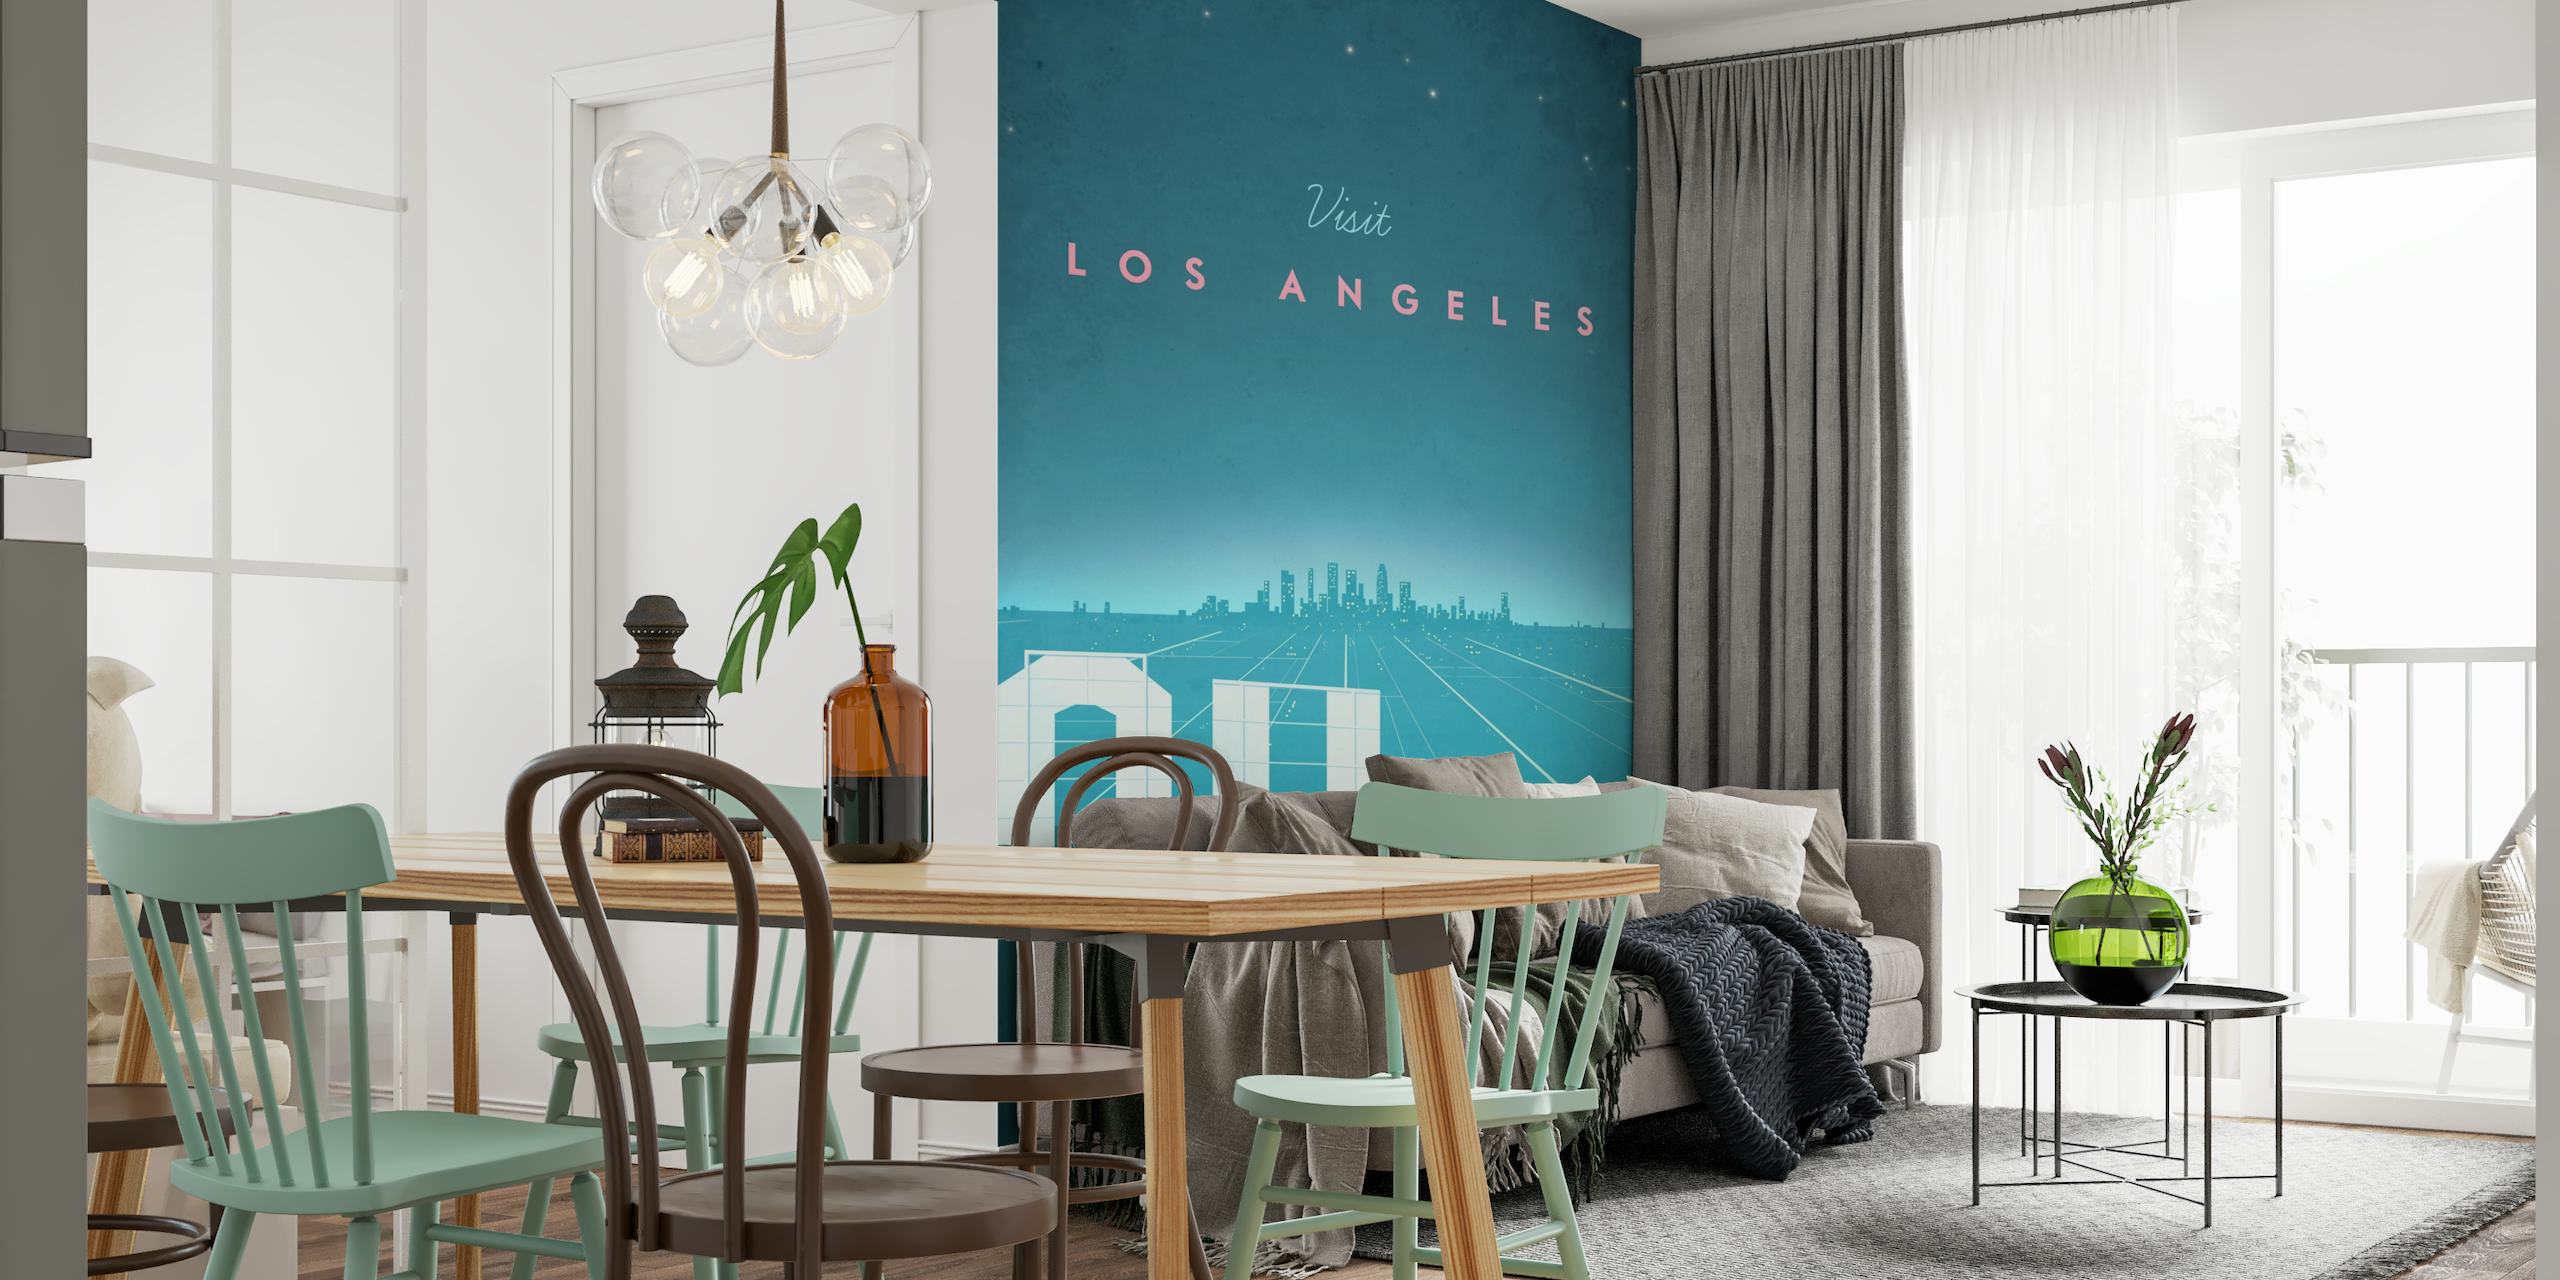 Los Angeles Travel Poster papiers peint